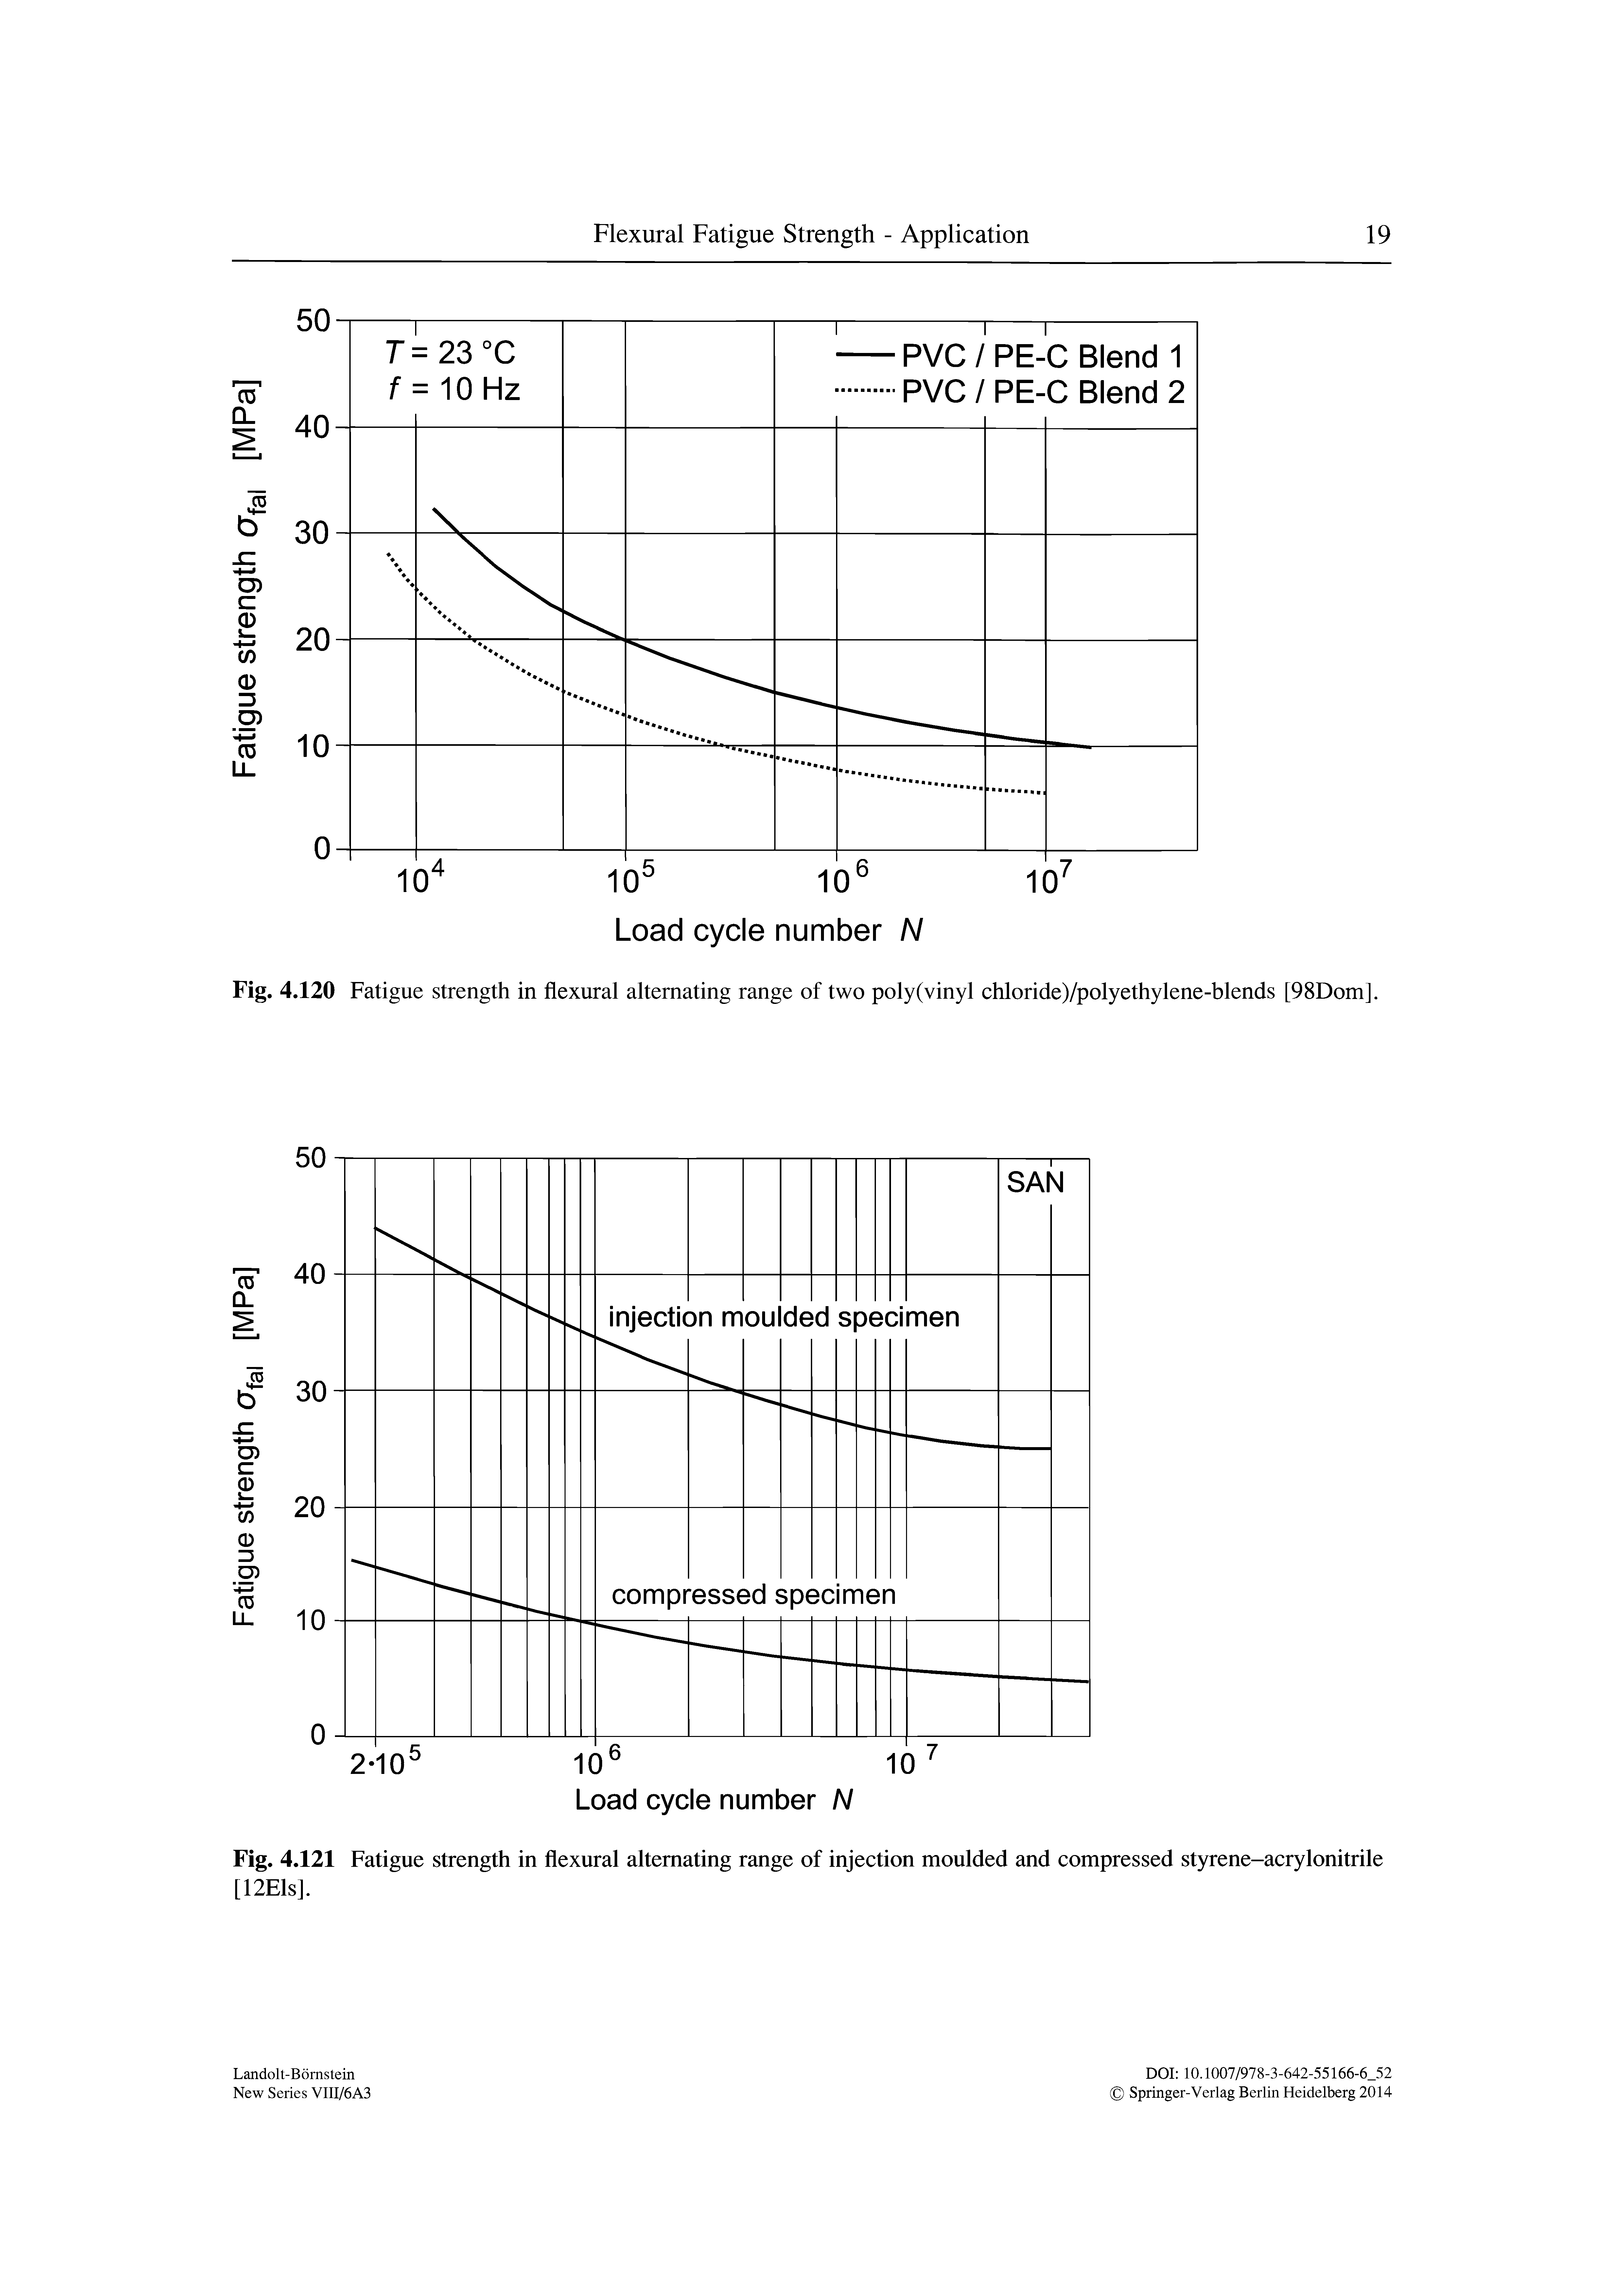 Fig. 4.120 Fatigue strength in flexural alternating range of two poly(vinyl chloride)/polyethylene-blends [98Dom].